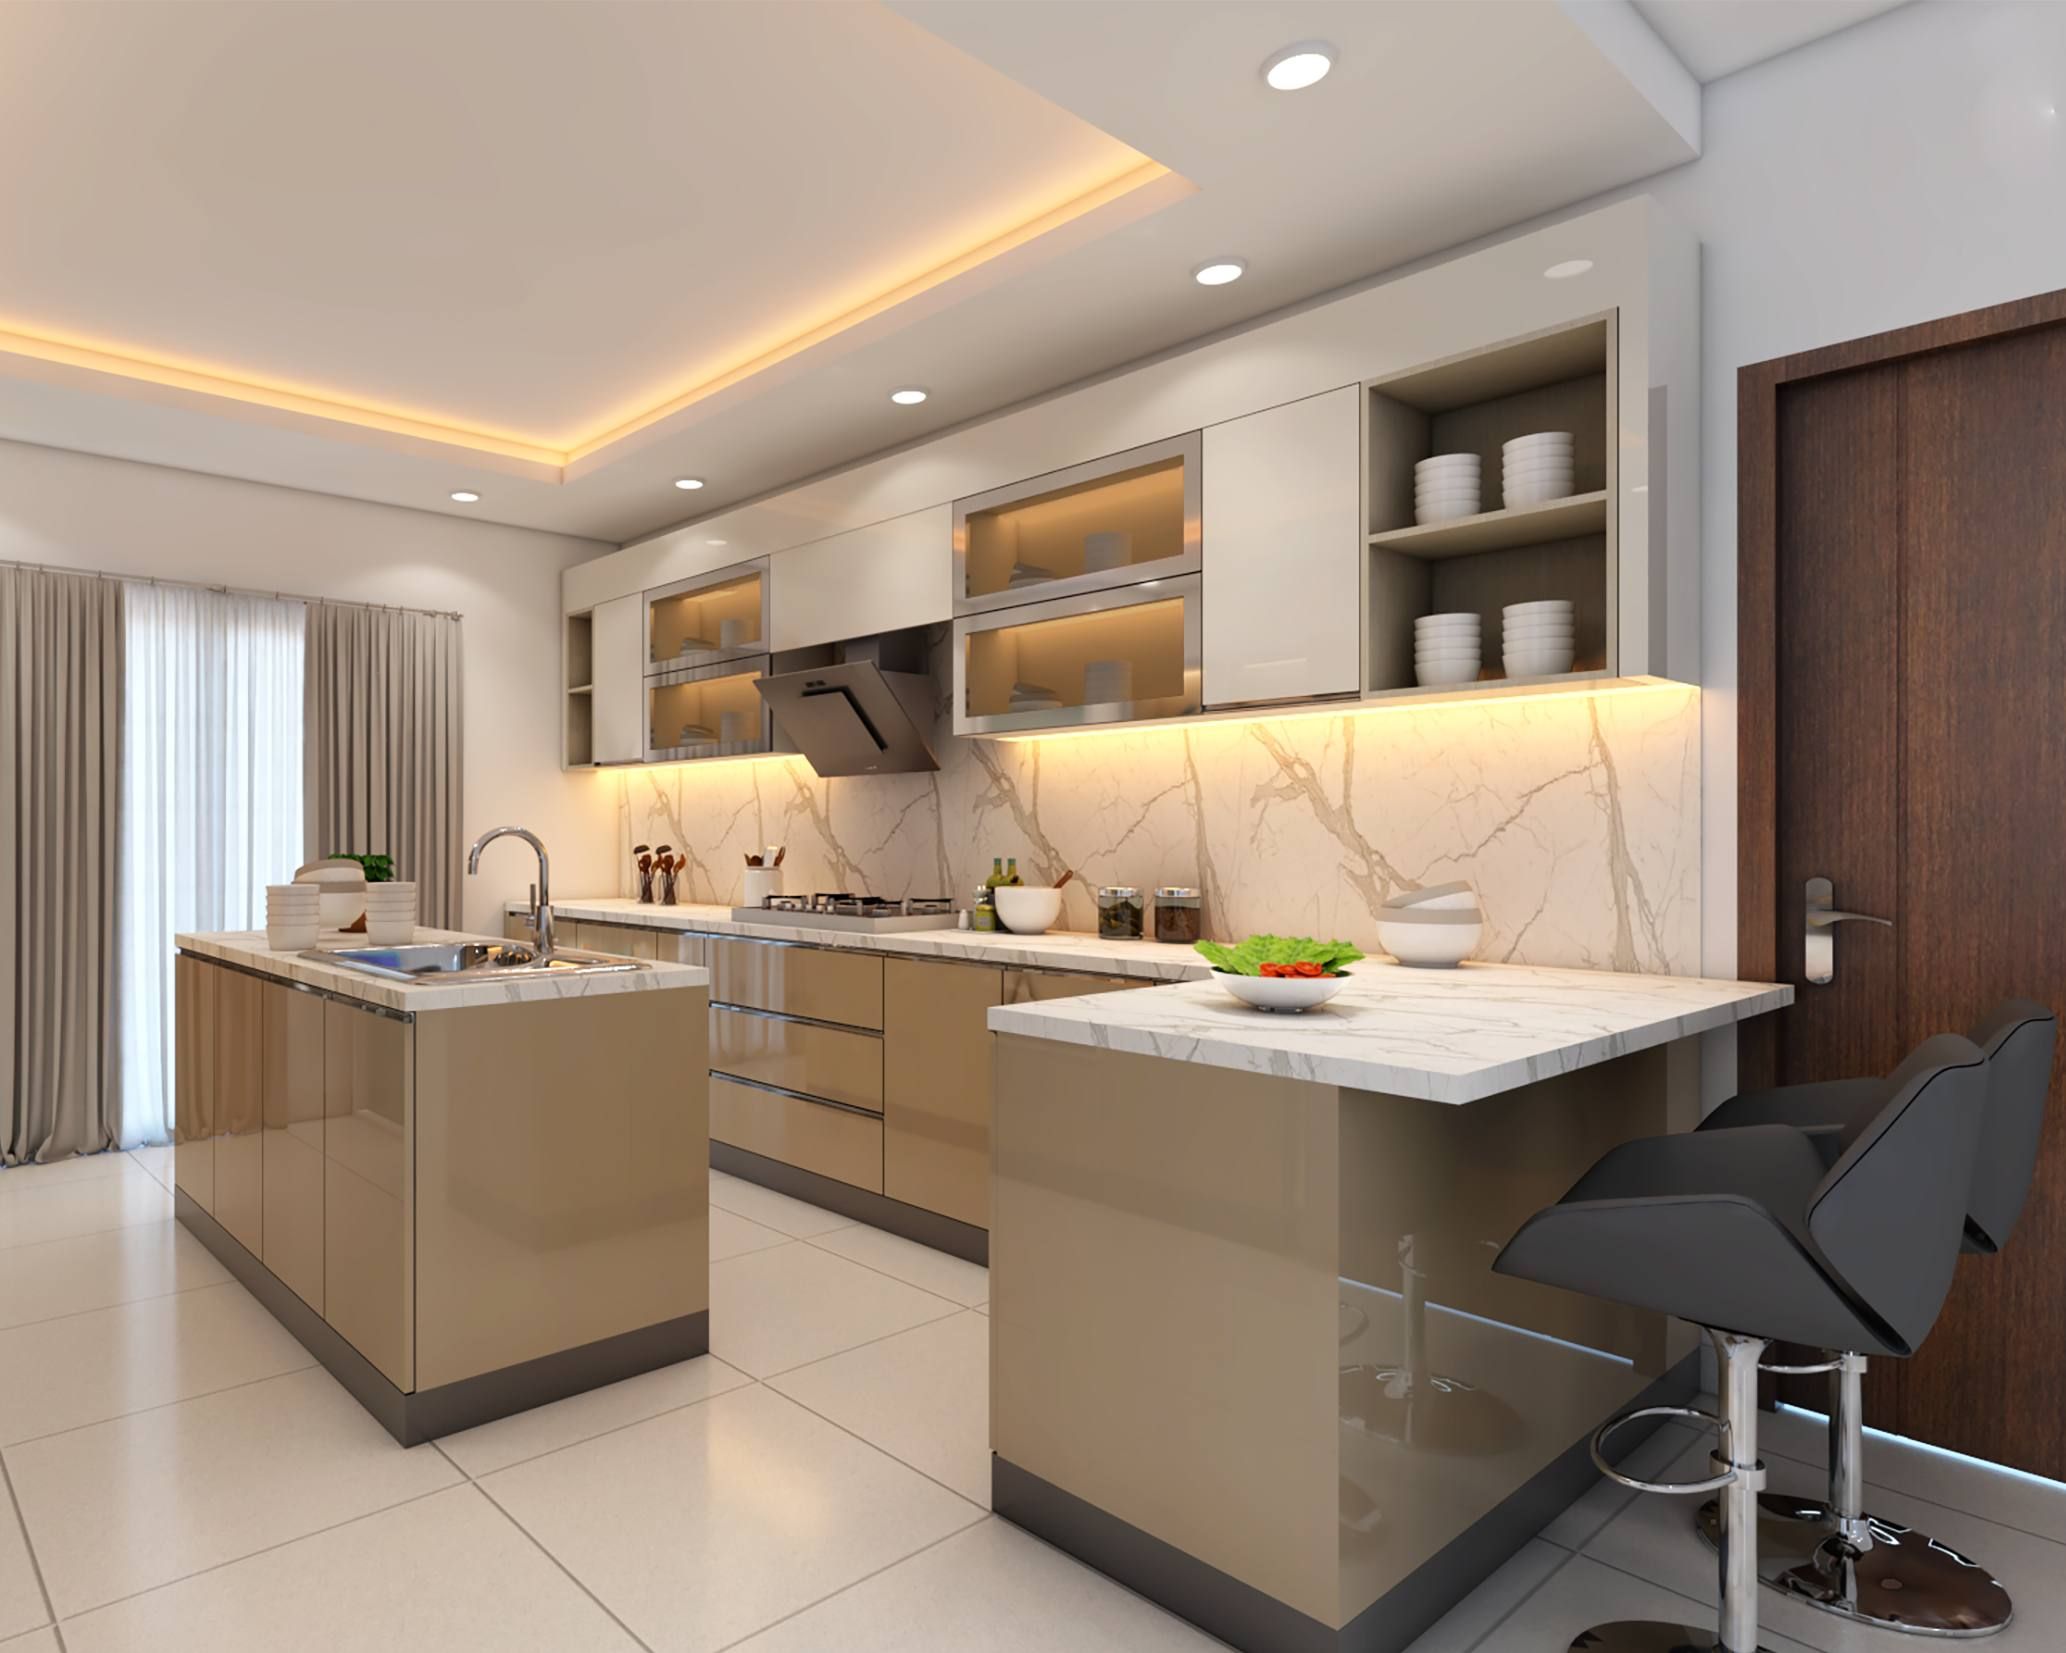 Modern Modular Open Kitchen Design With Island Counter